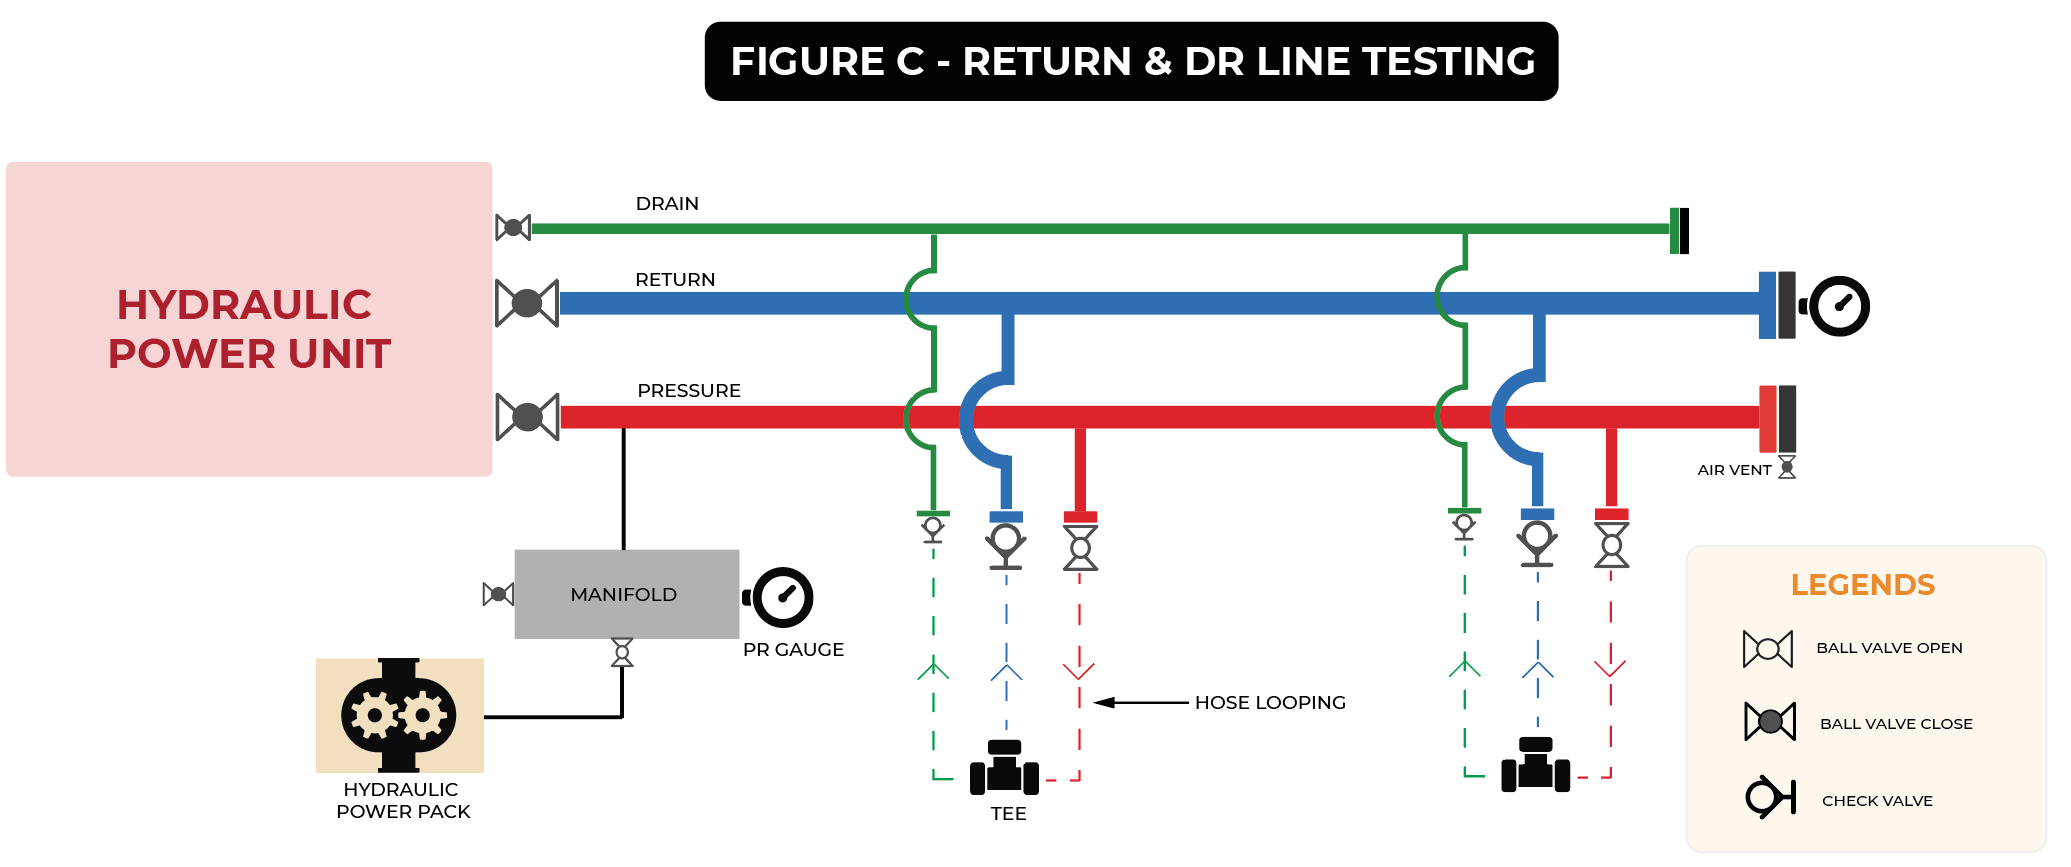 Return and Drain Line testing